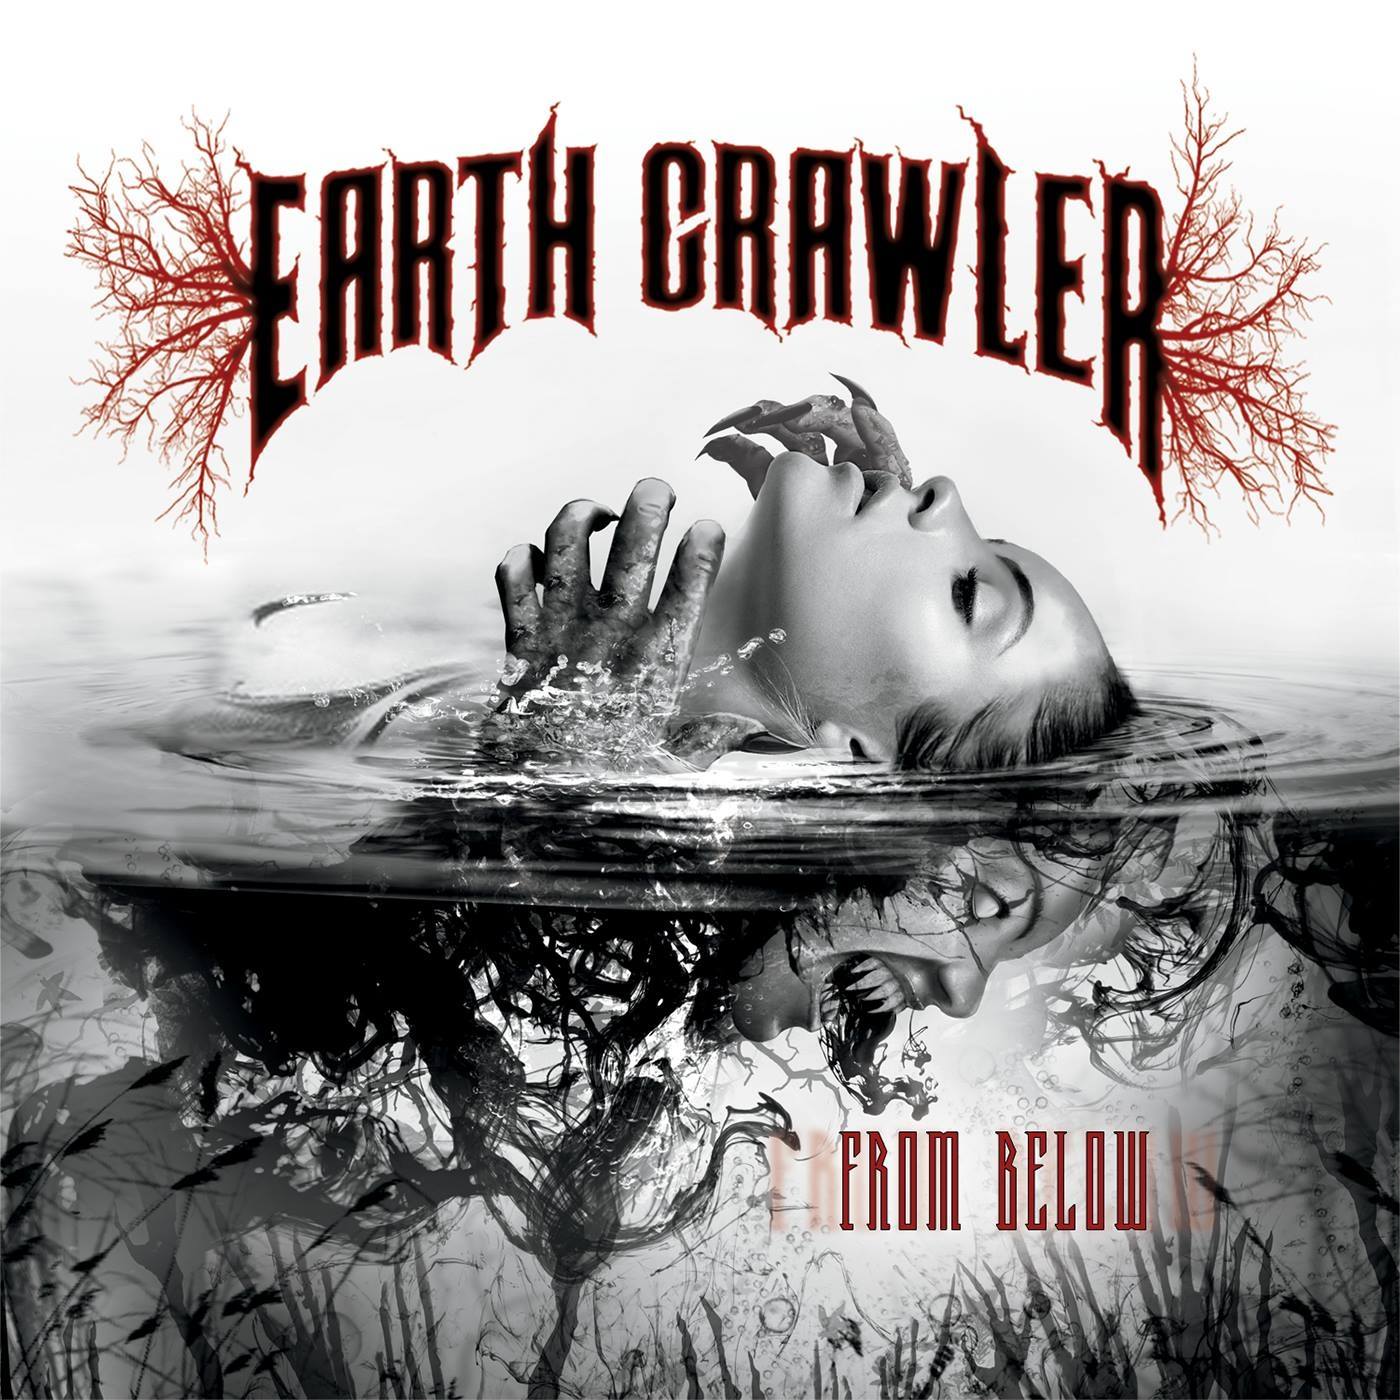 2017 - Earth Crawler - From Below